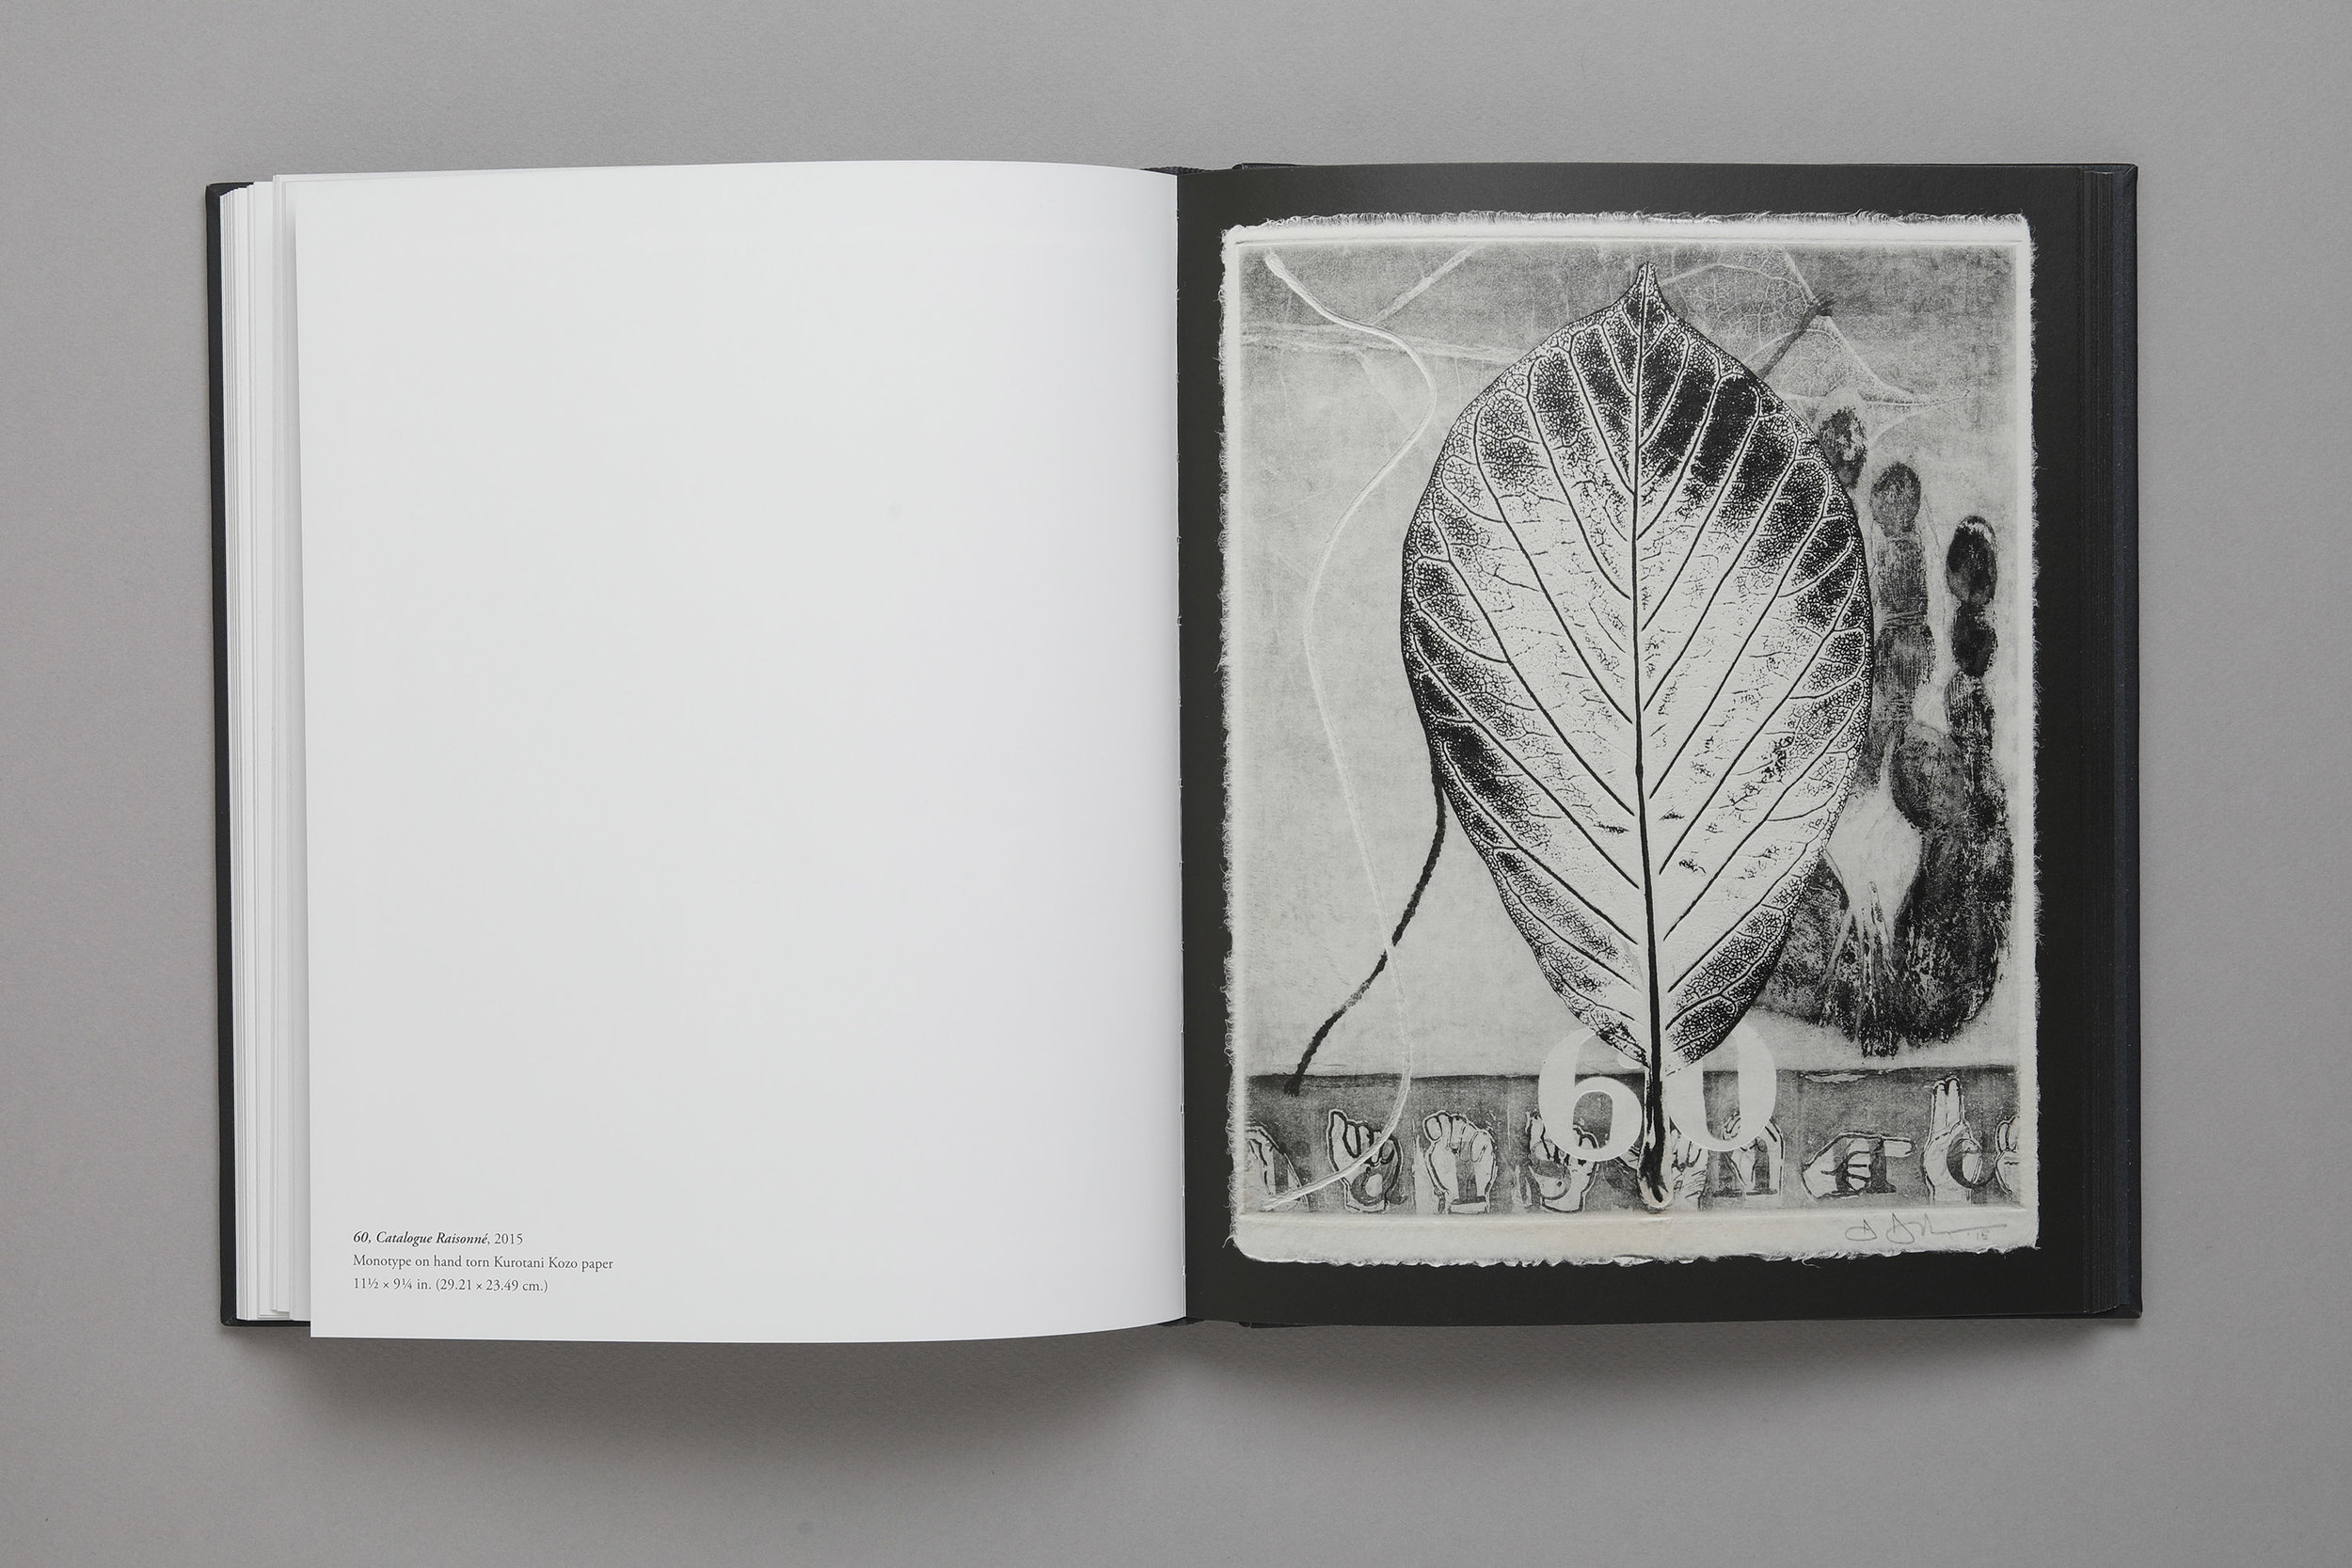  Jasper Johns: The 100 Monotypes, plate 60 